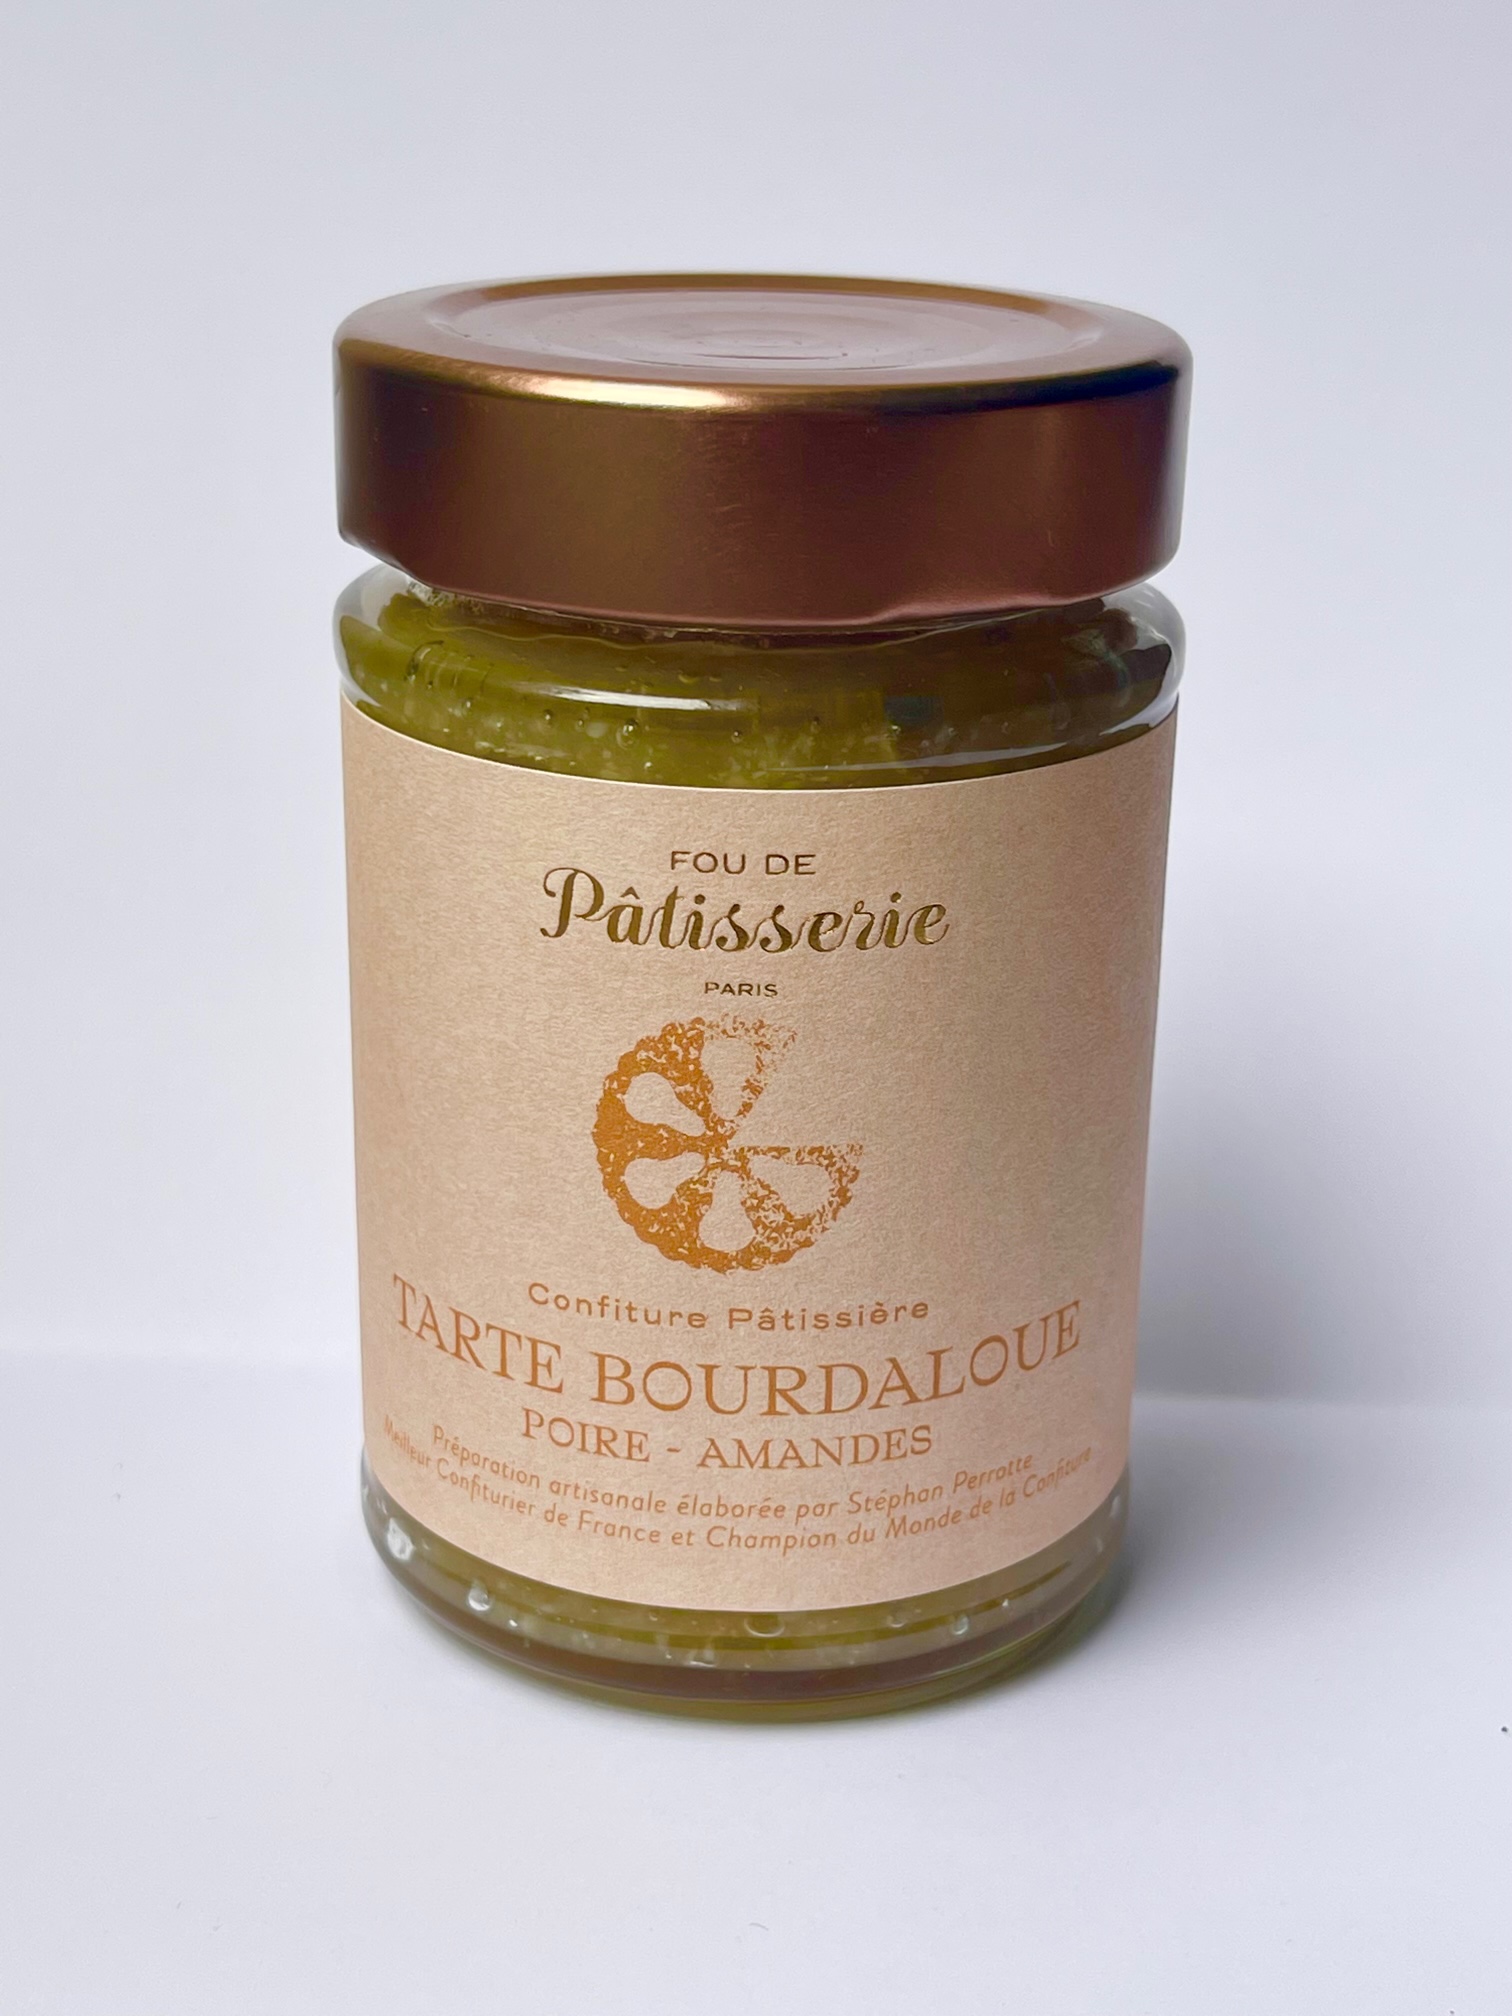 La Confiture Pâtissière "Tarte Bourdaloue"